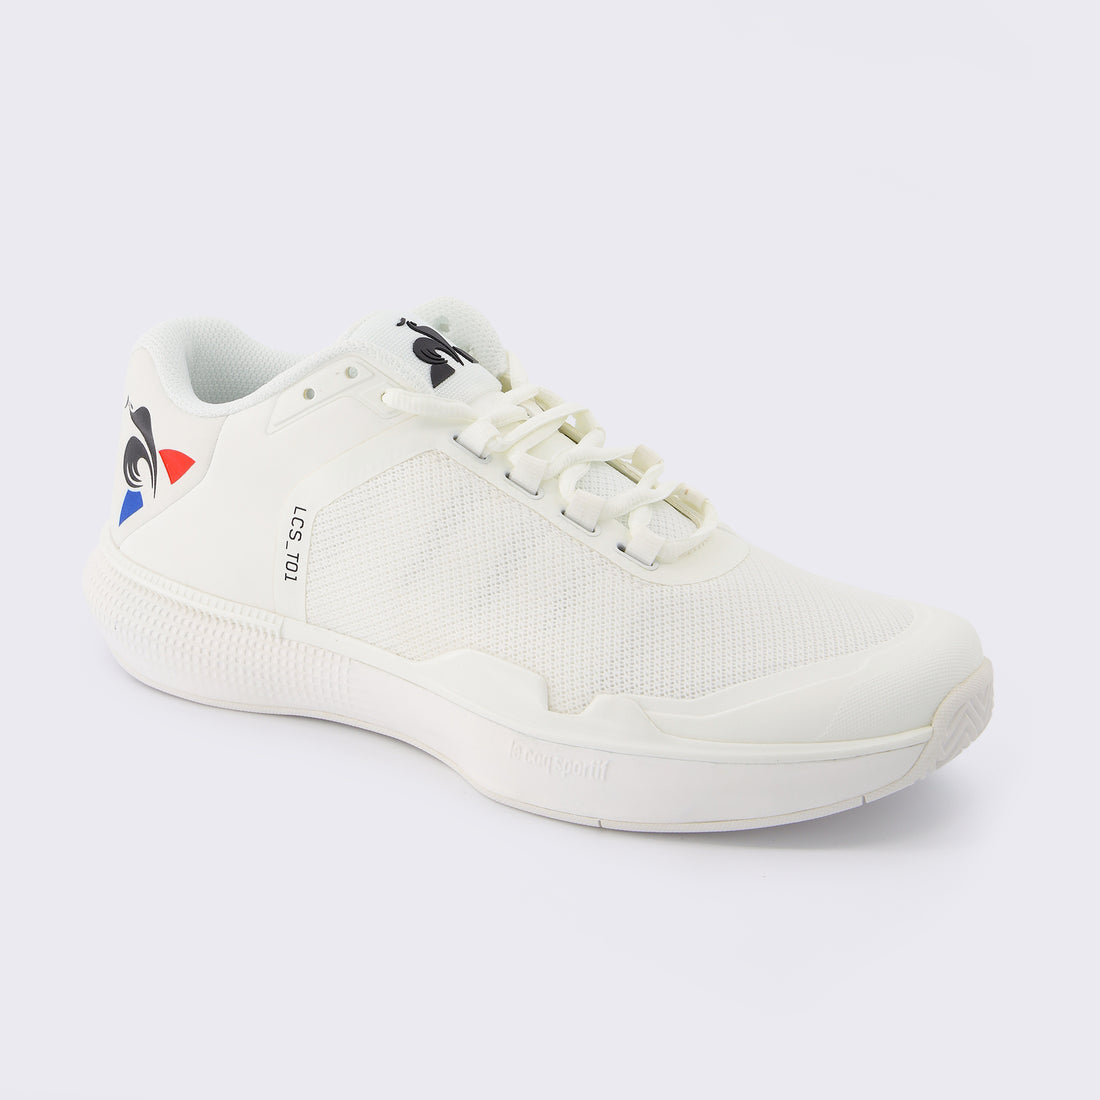 2010997-FUTUR LCS T01 CLAY bright white | Chaussures de tennis FUTUR T01 TERRE BATTUE Unisexe